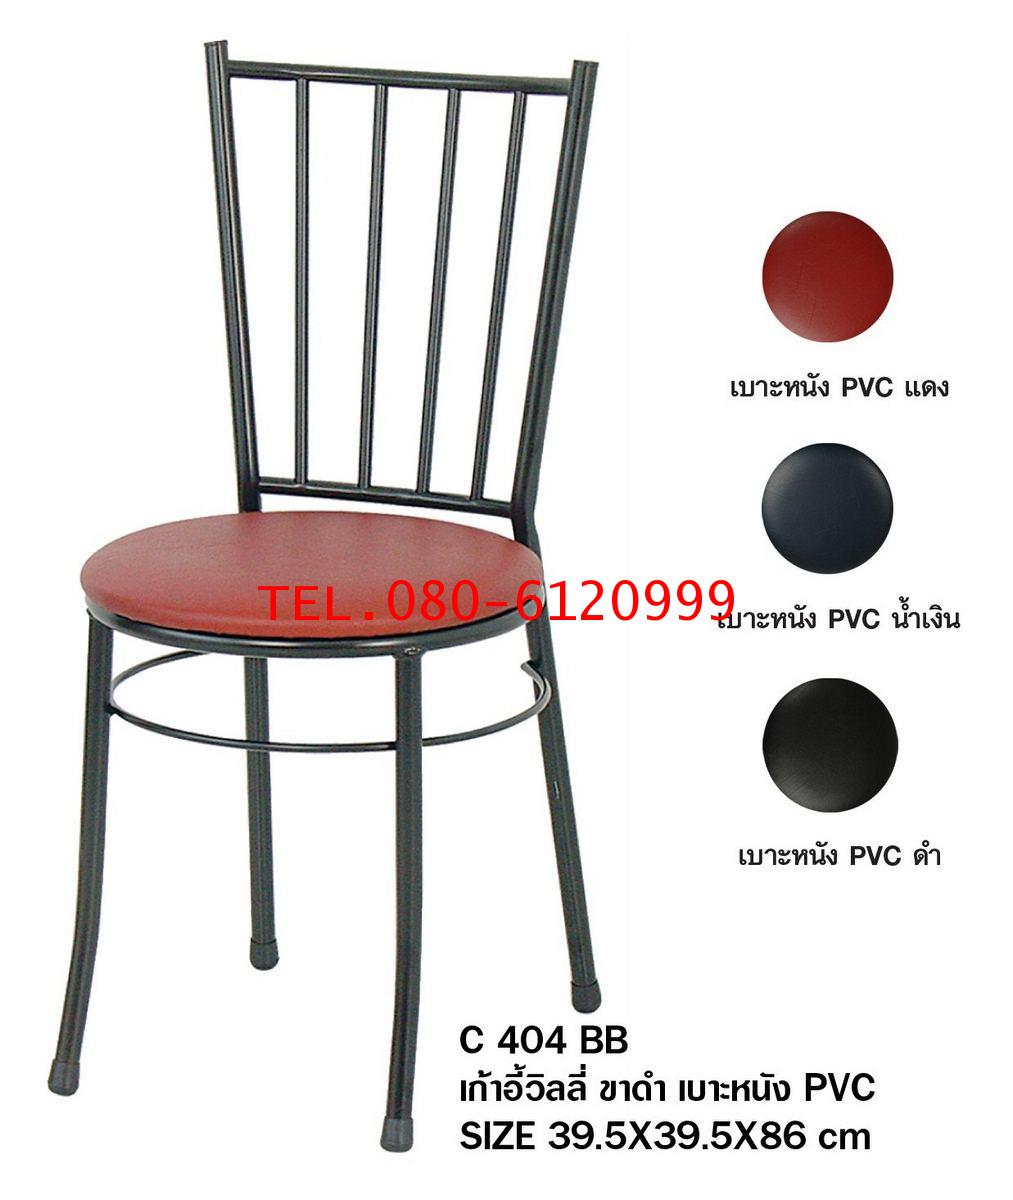 pmy29-20 เก้าอี้วิลลี่ ขาดำ เบาะหนัง PVC